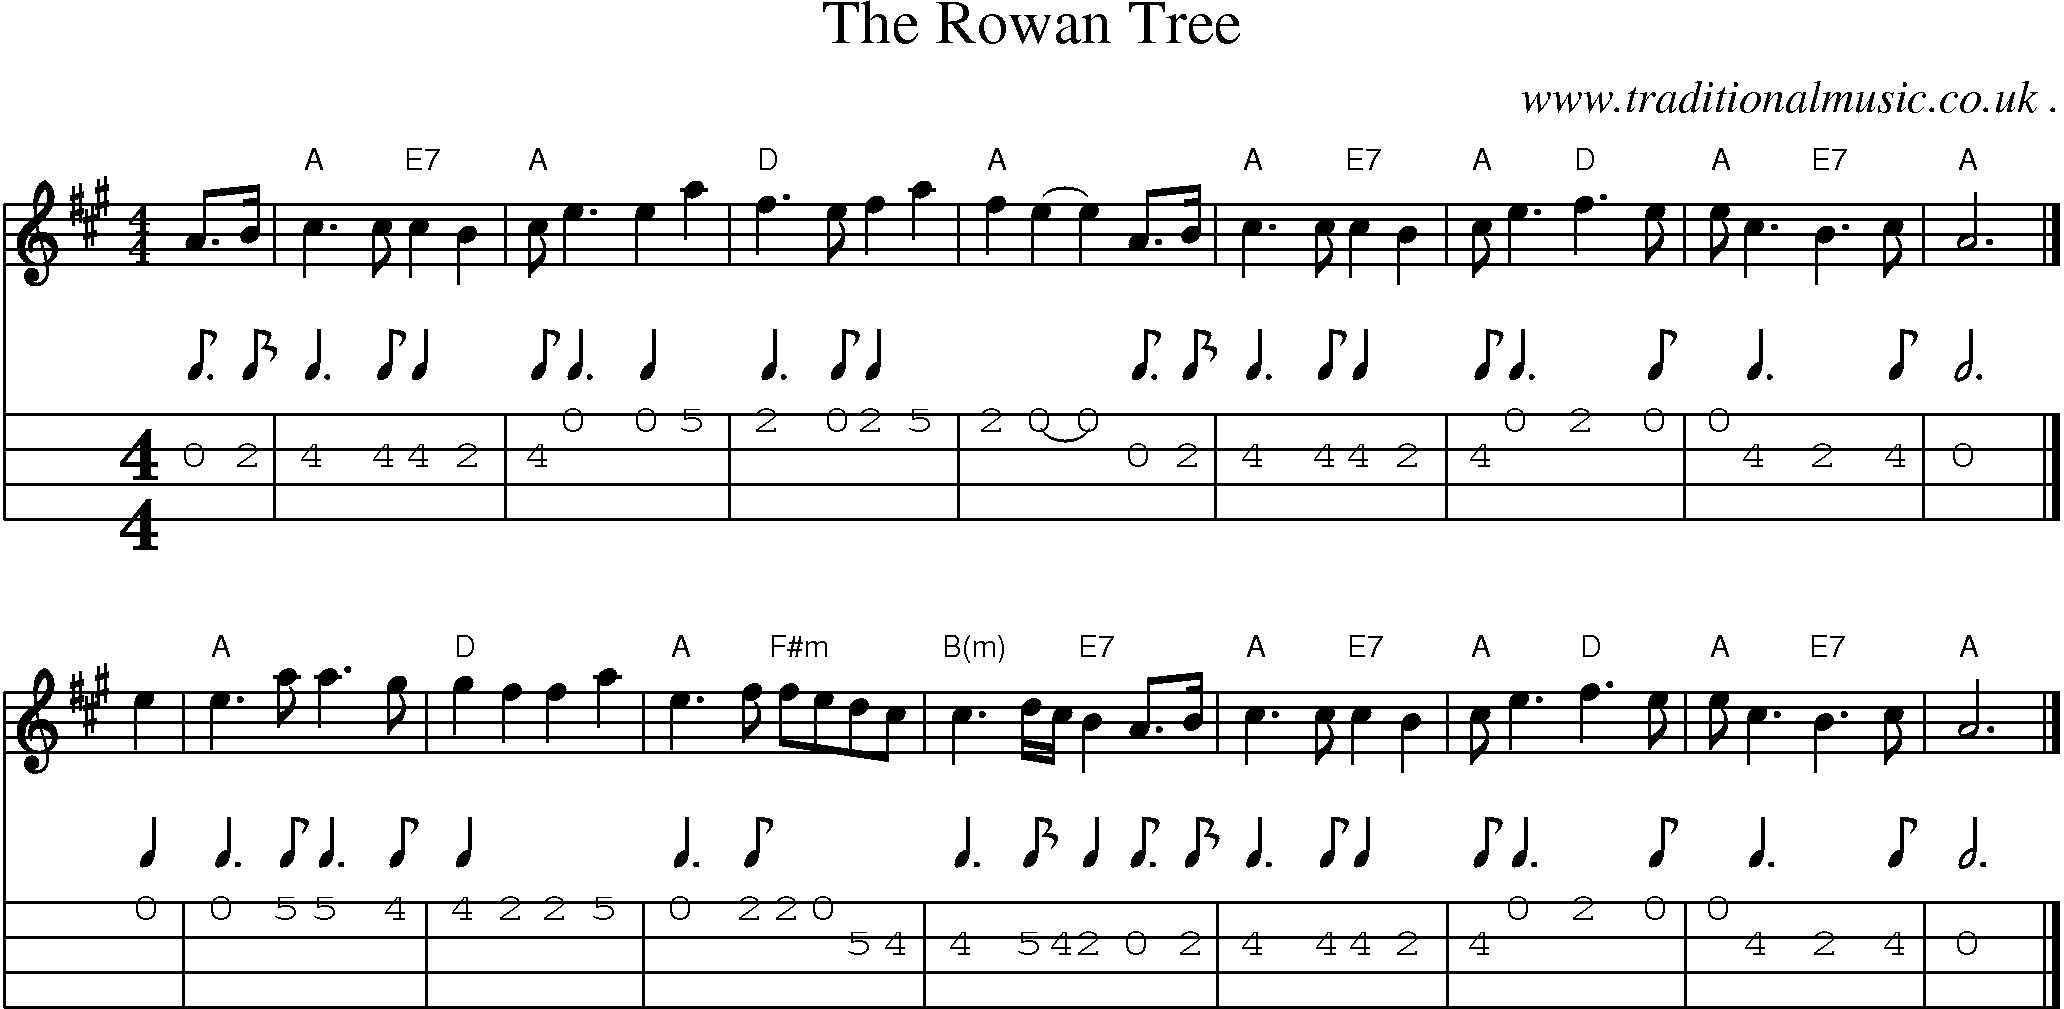 Sheet-music  score, Chords and Mandolin Tabs for The Rowan Tree